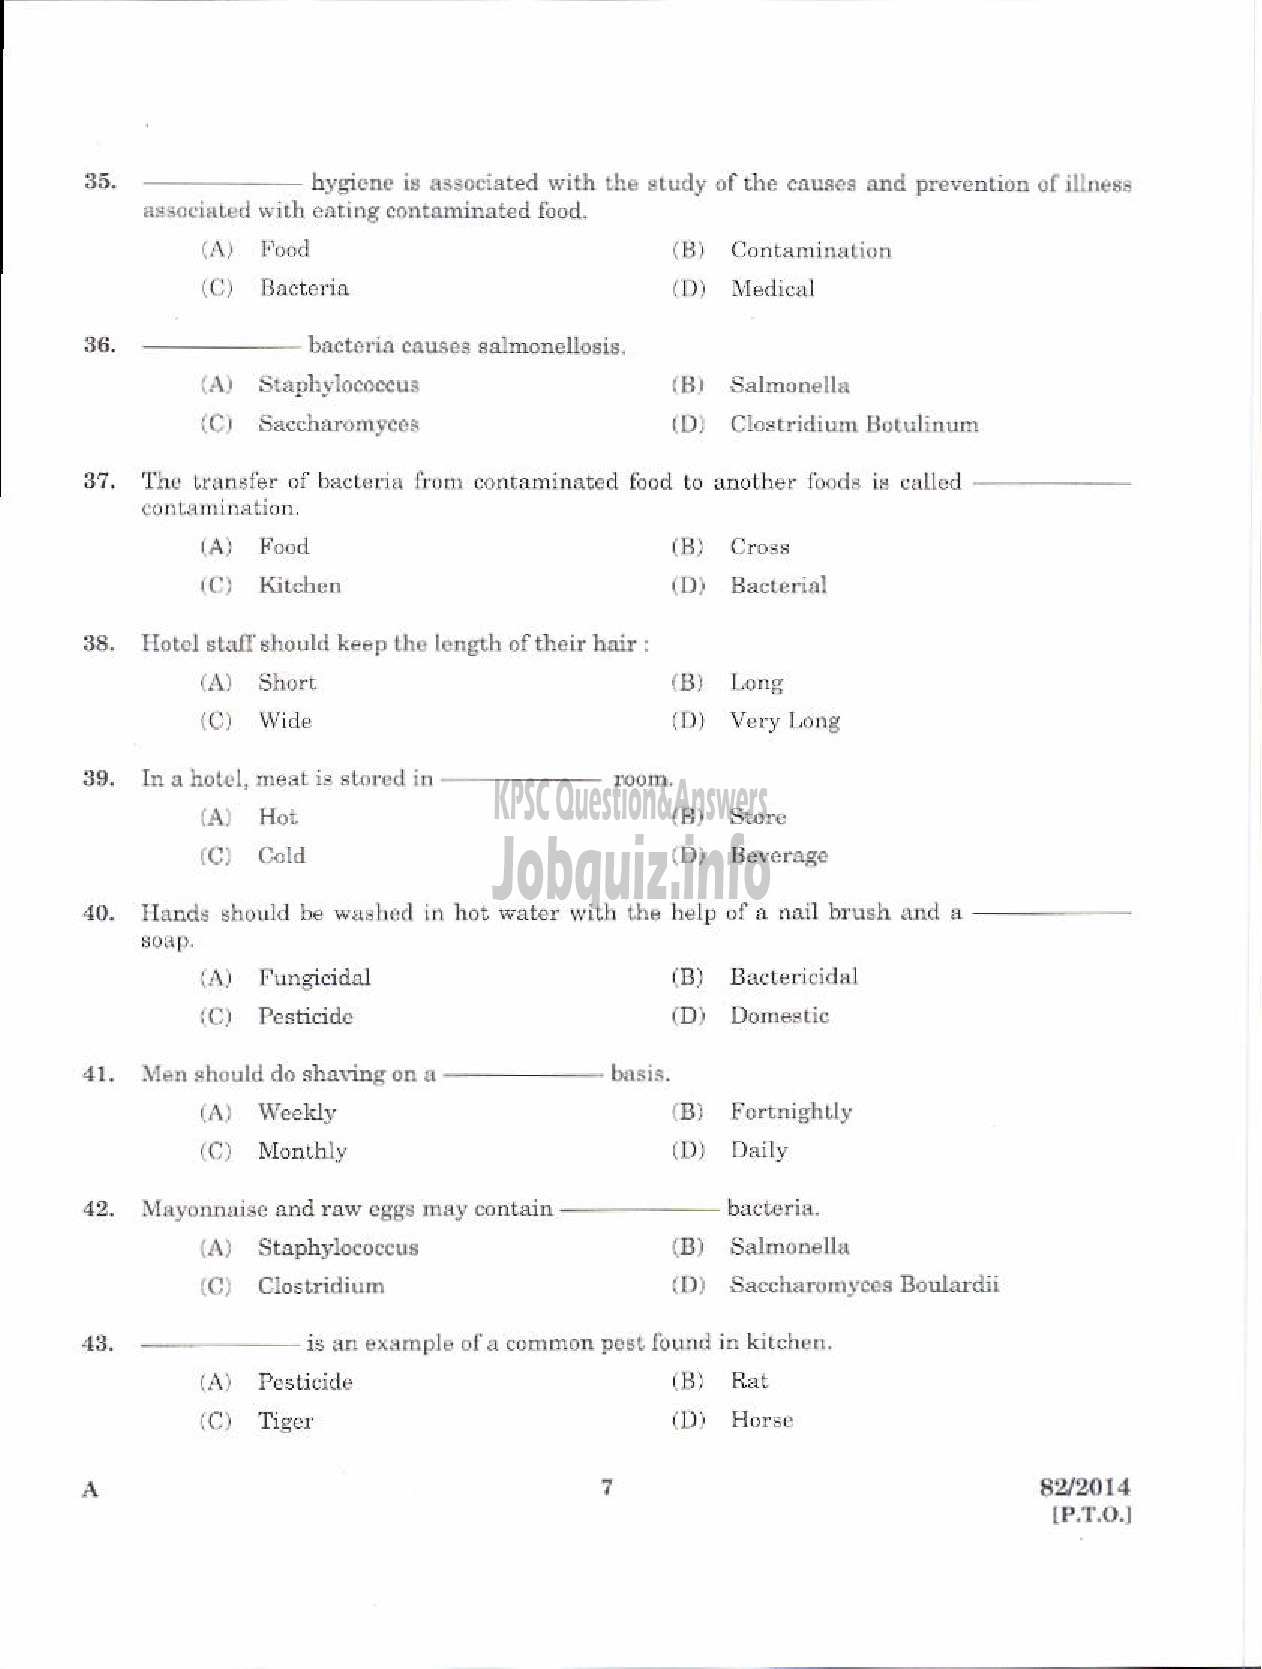 Kerala PSC Question Paper - HOSPITALITY ASSISTANT NCA EZHAVA/MUSLIM TOURISM DEPT PTA AND EKM-5